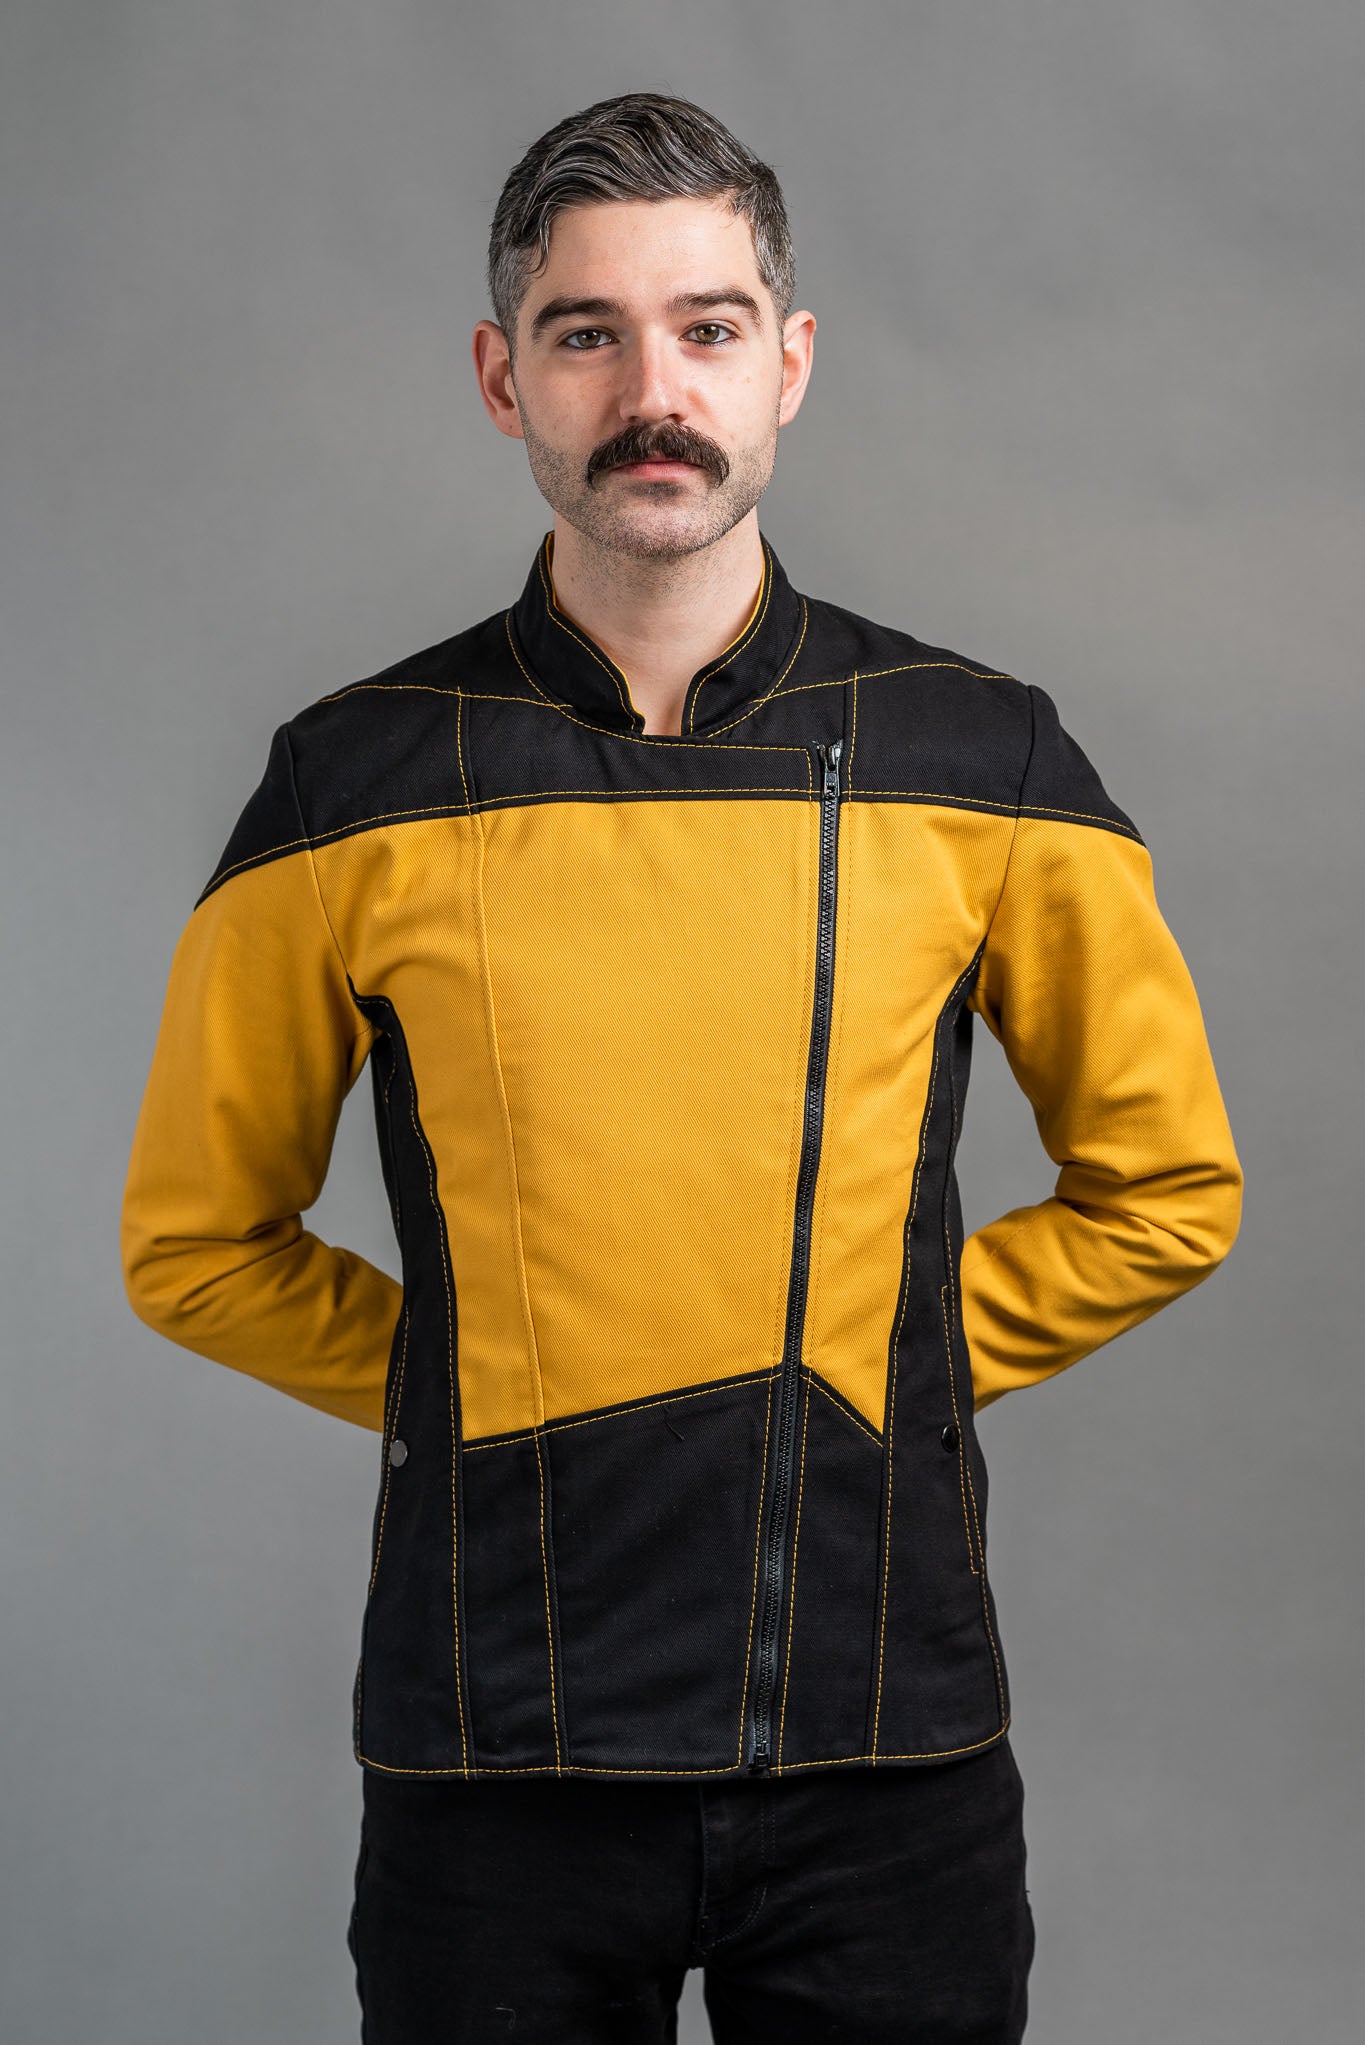 Starfleet 2364 - Operations Gold [Mens]